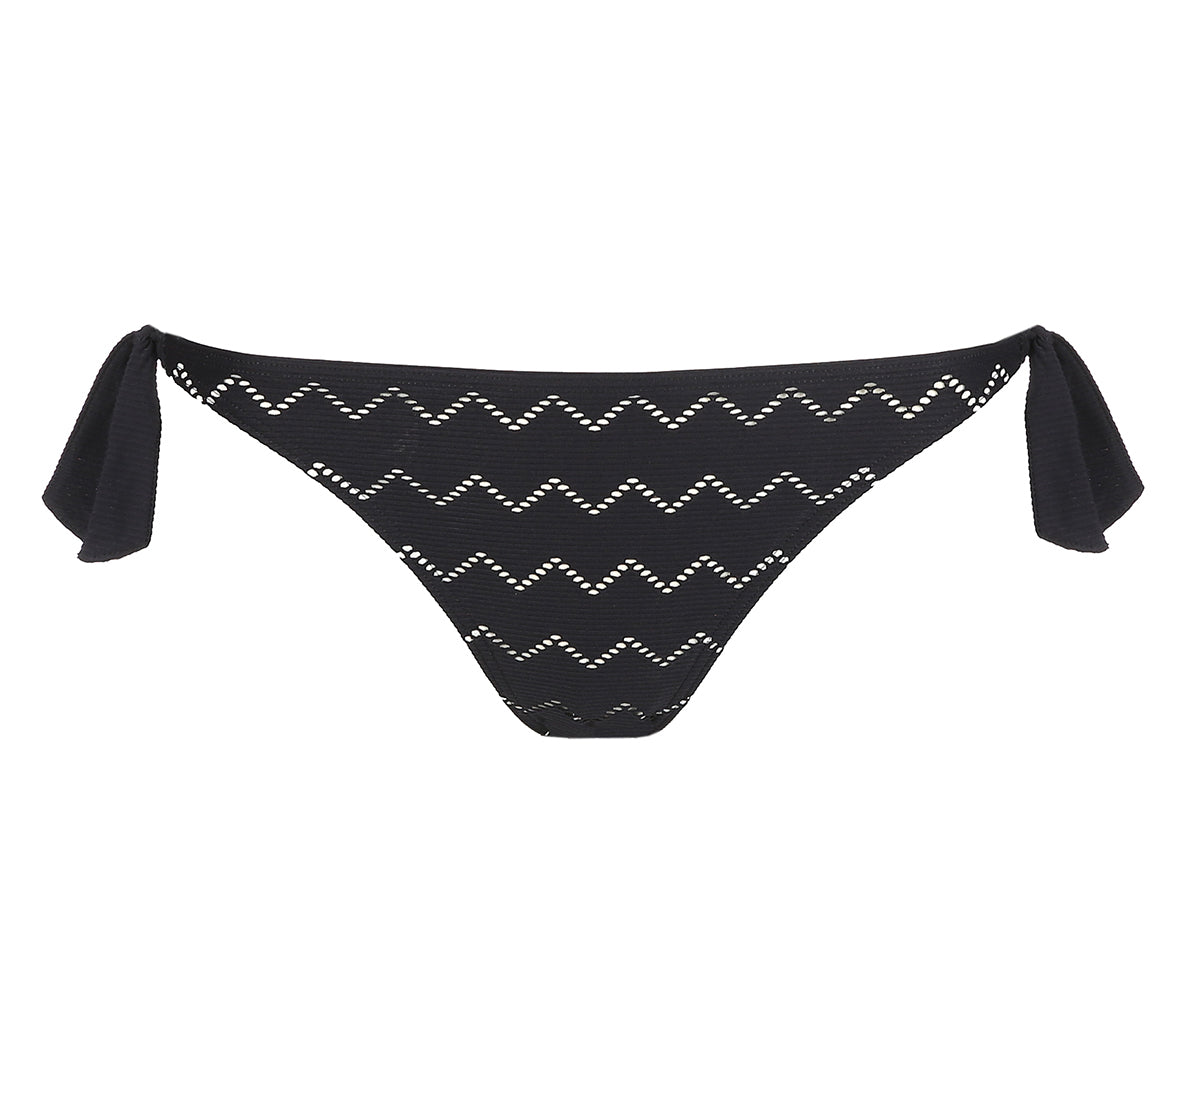 PrimaDonna Maya Side Tie Bikini Swim Brief (4004353),Small,Black - Black,Small